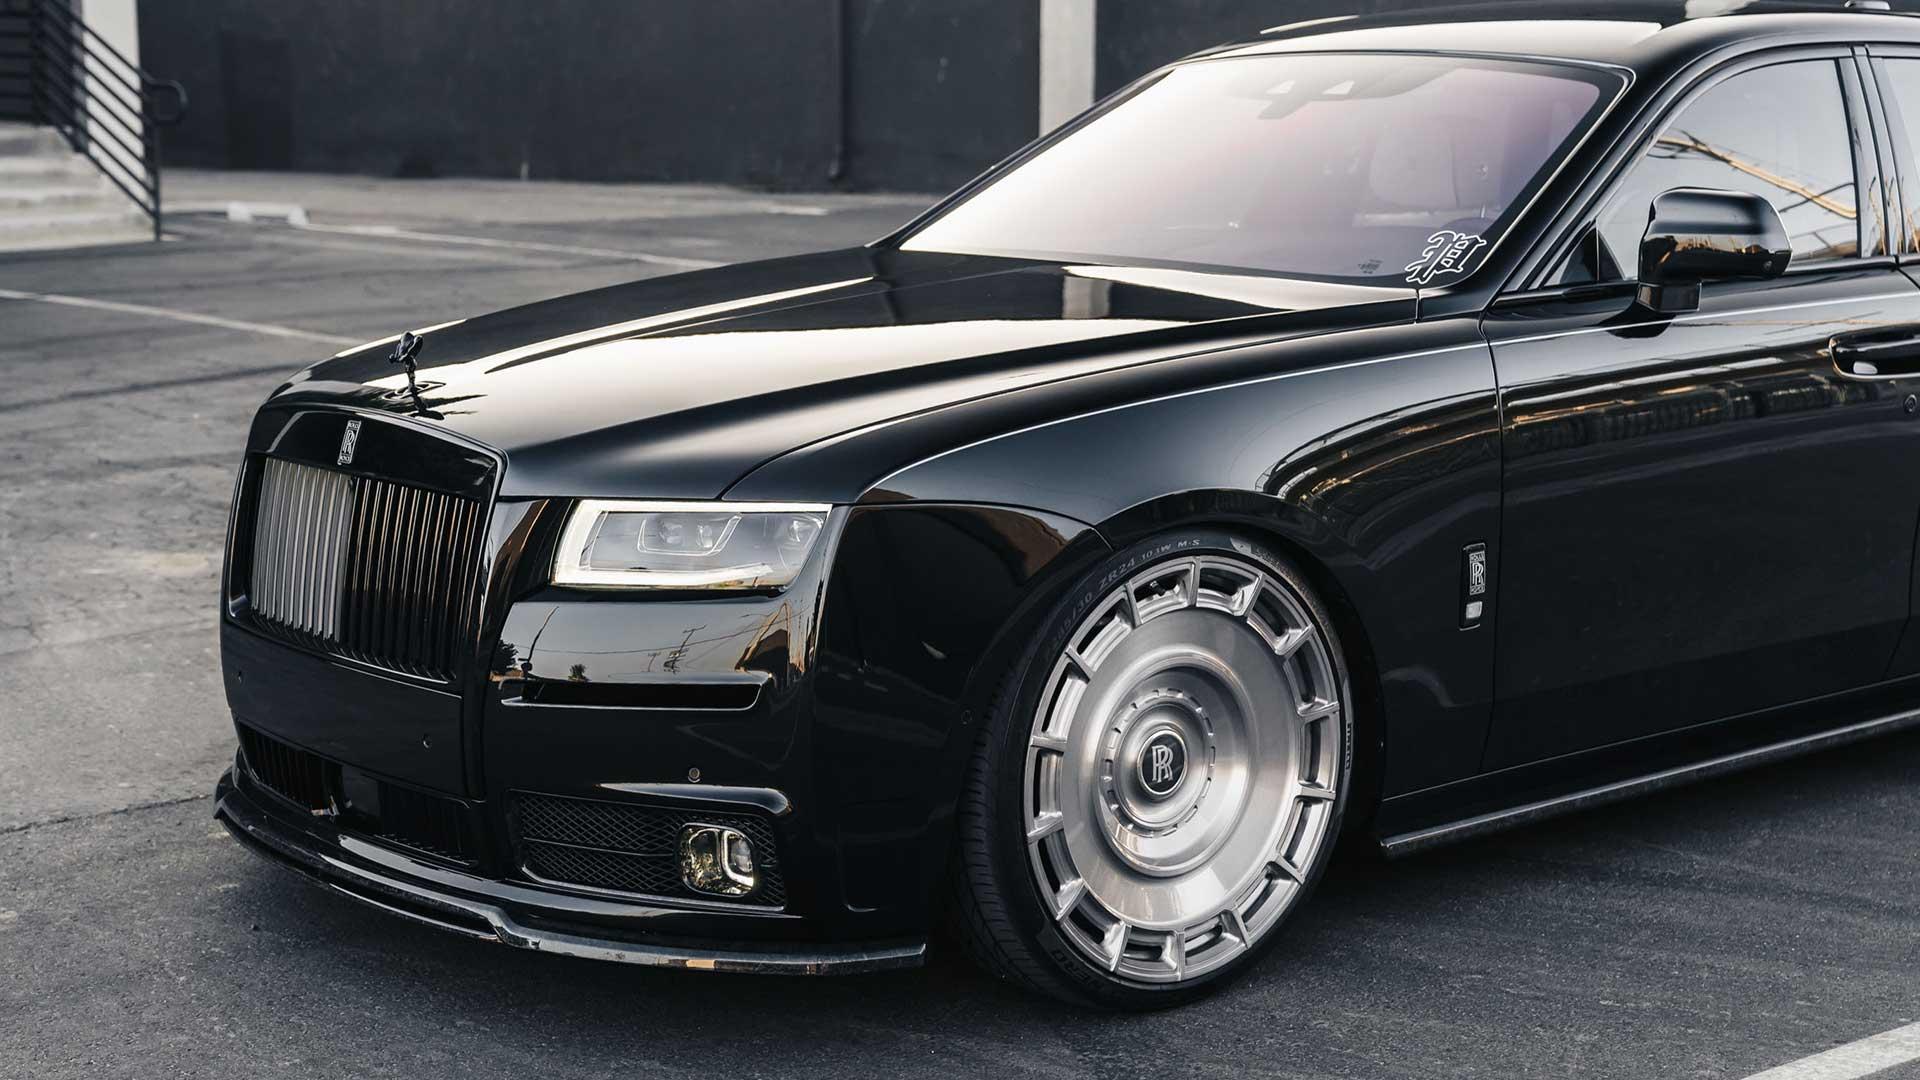 Rolls-Royce Ghost Urban Automotive voorkant